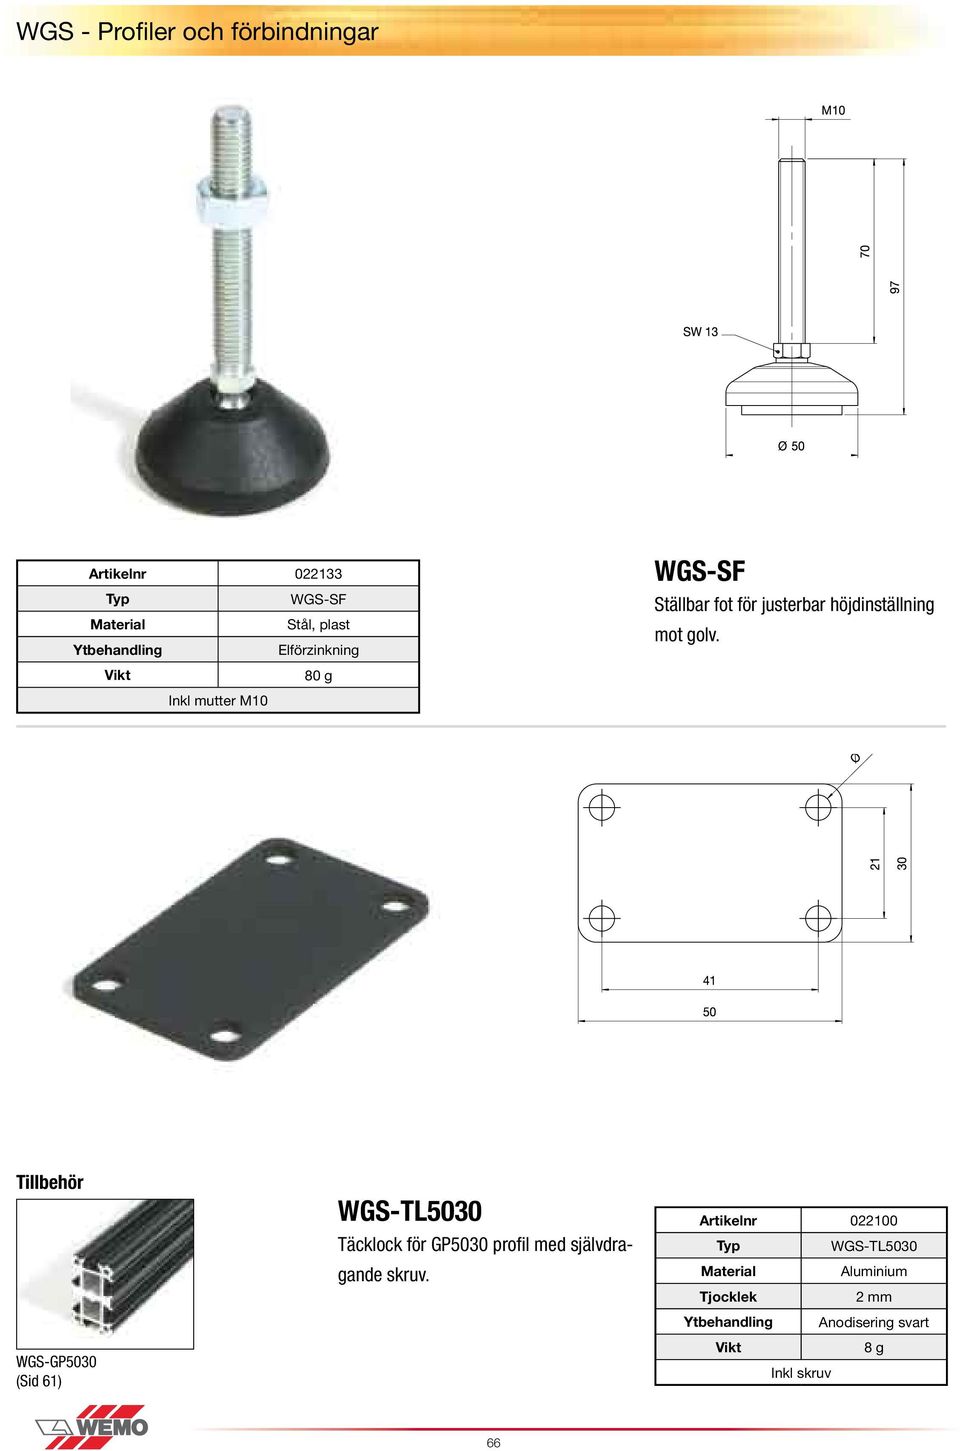 WGS-GP5030 (Sid 61) WGS-TL5030 Täcklock för GP5030 profil med